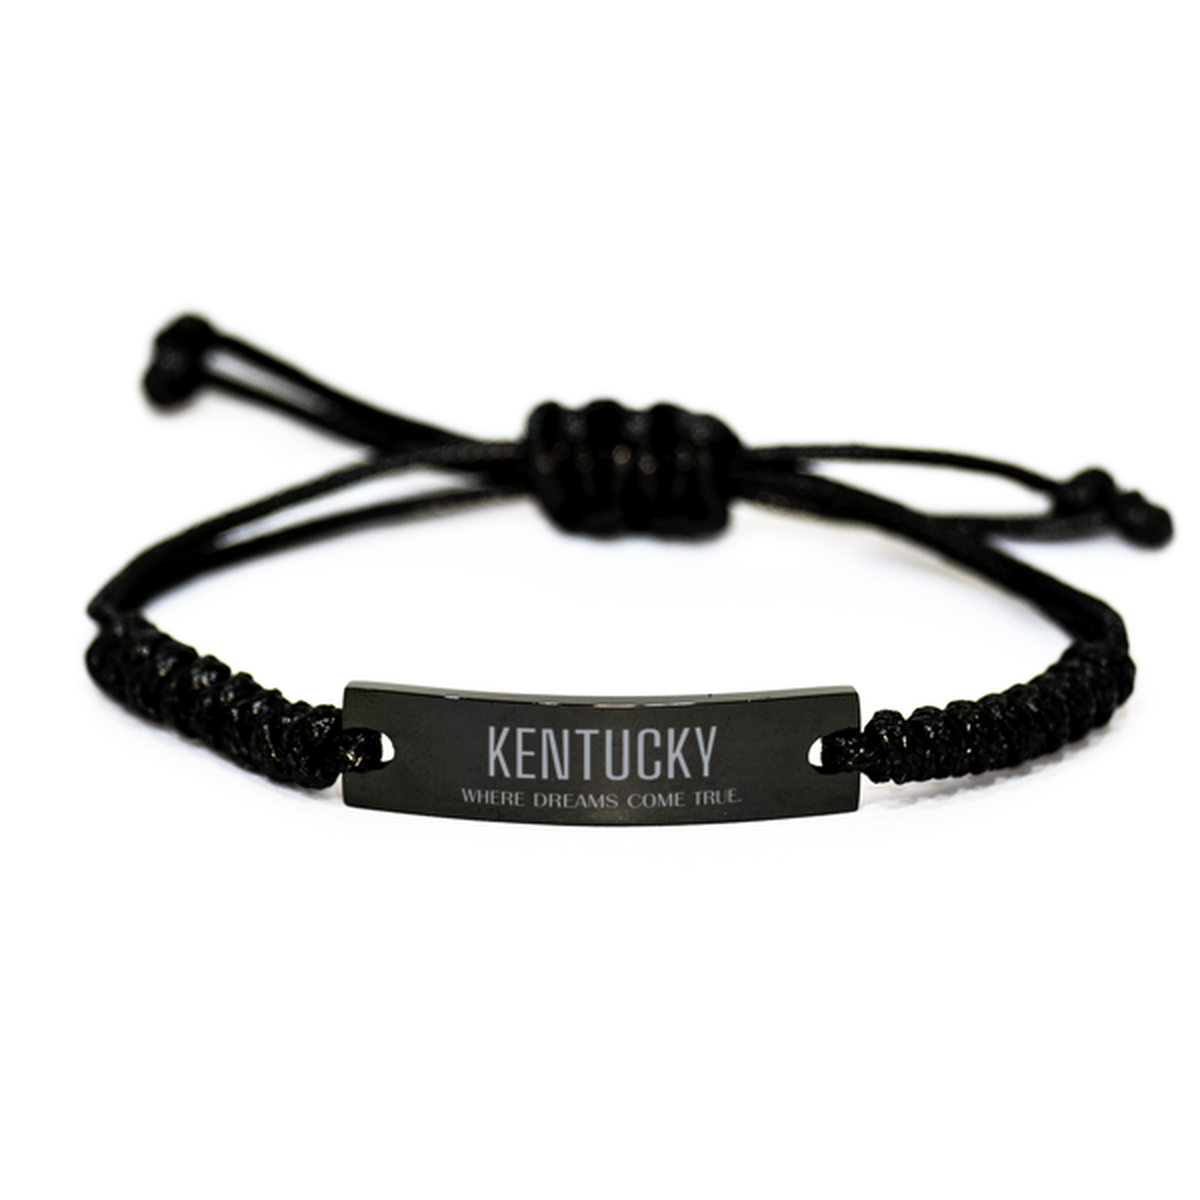 Love Kentucky State Black Rope Bracelet, Kentucky Where dreams come true, Birthday Inspirational Gifts For Kentucky Men, Women, Friends